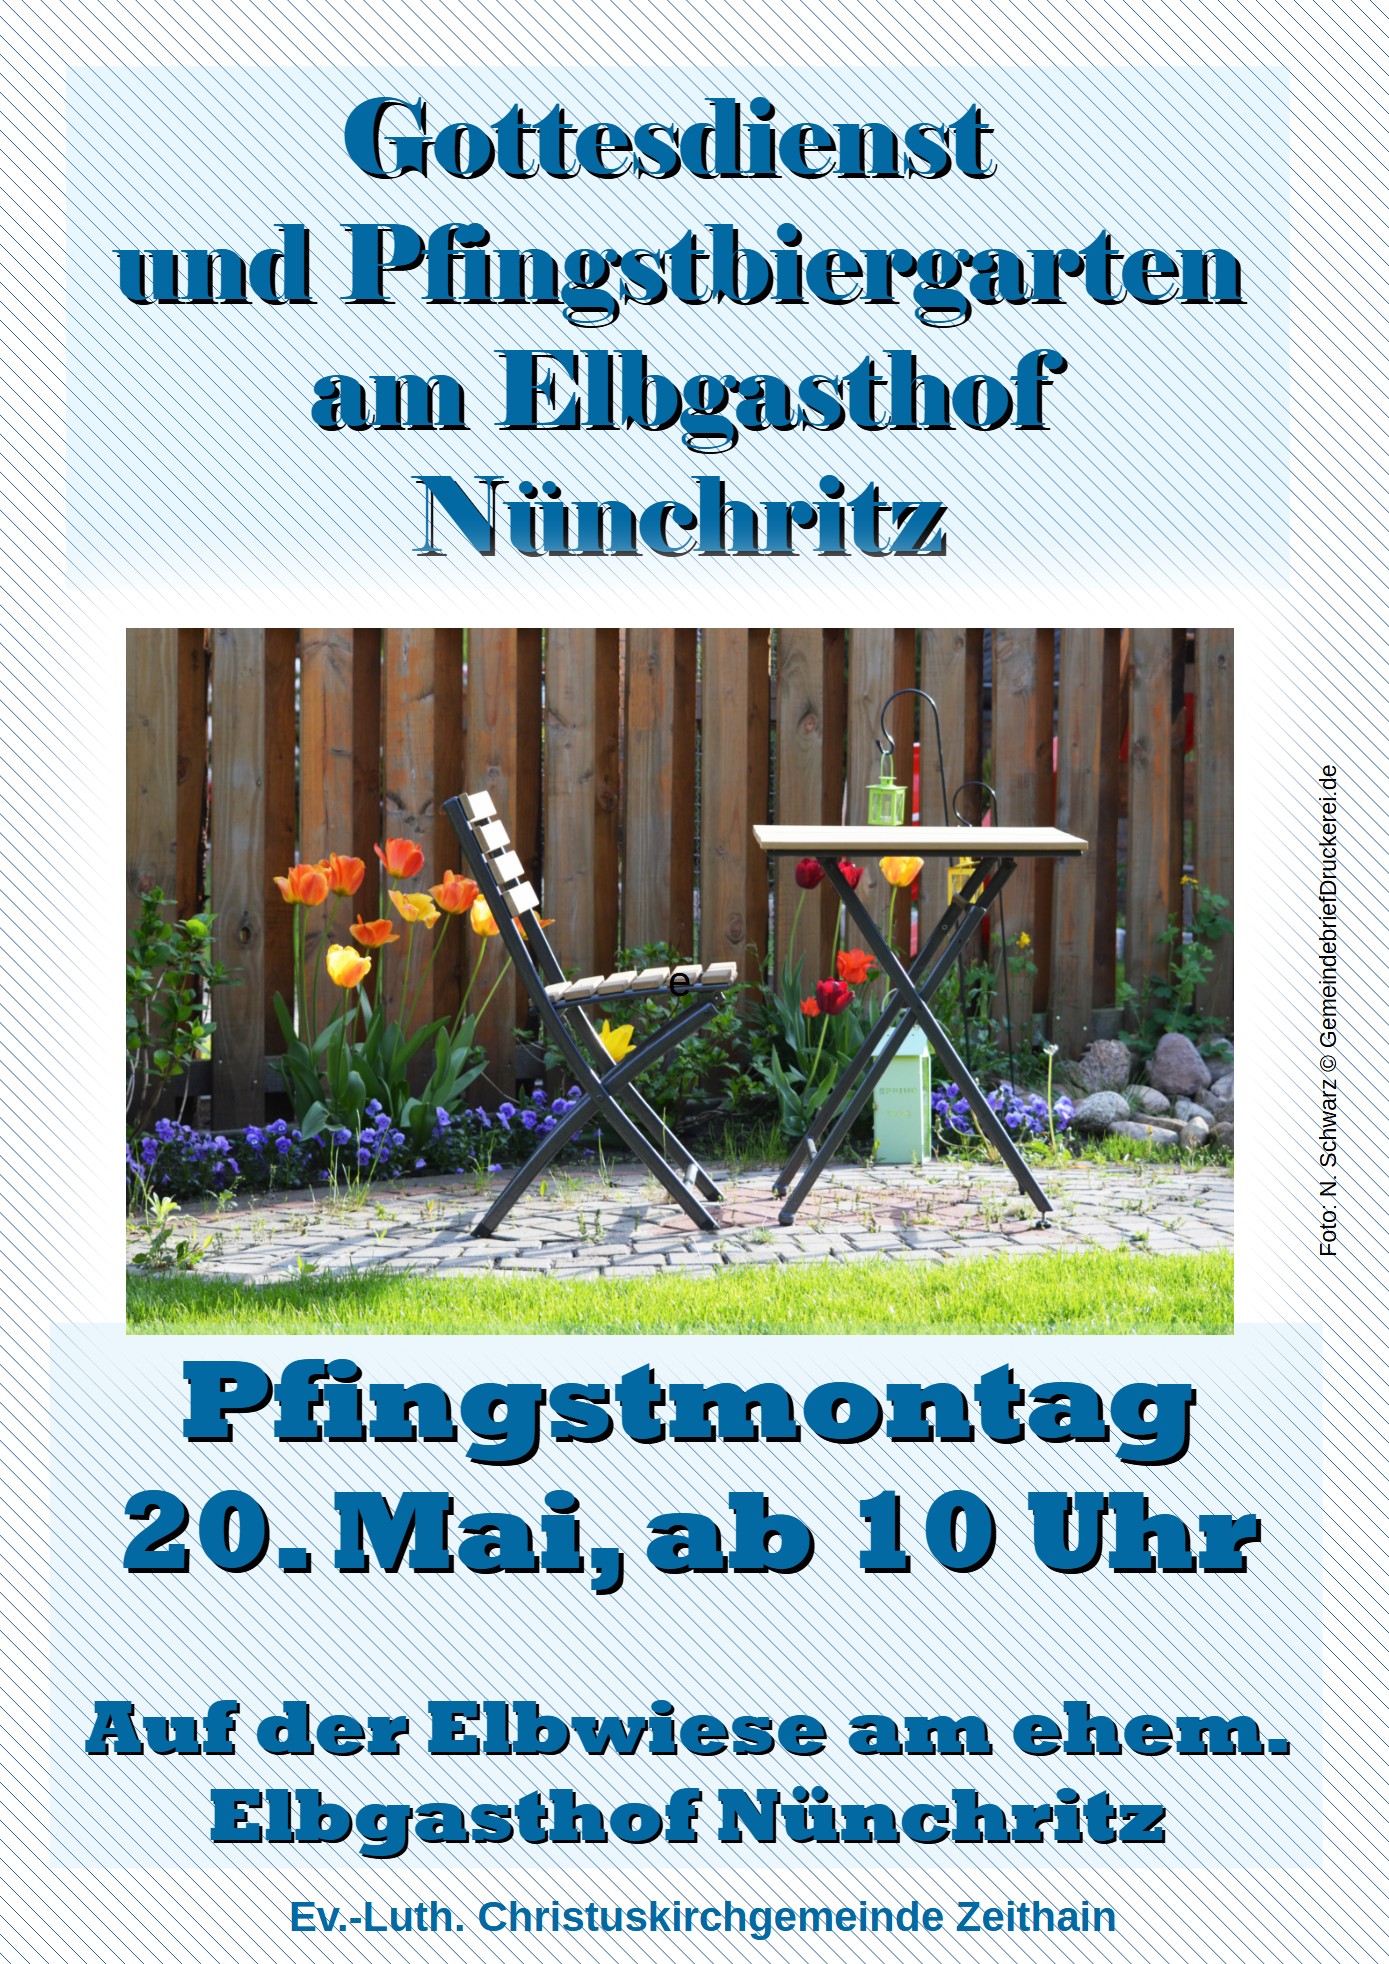 Pfingstbiergarten am 20. Mai in Nünchritz